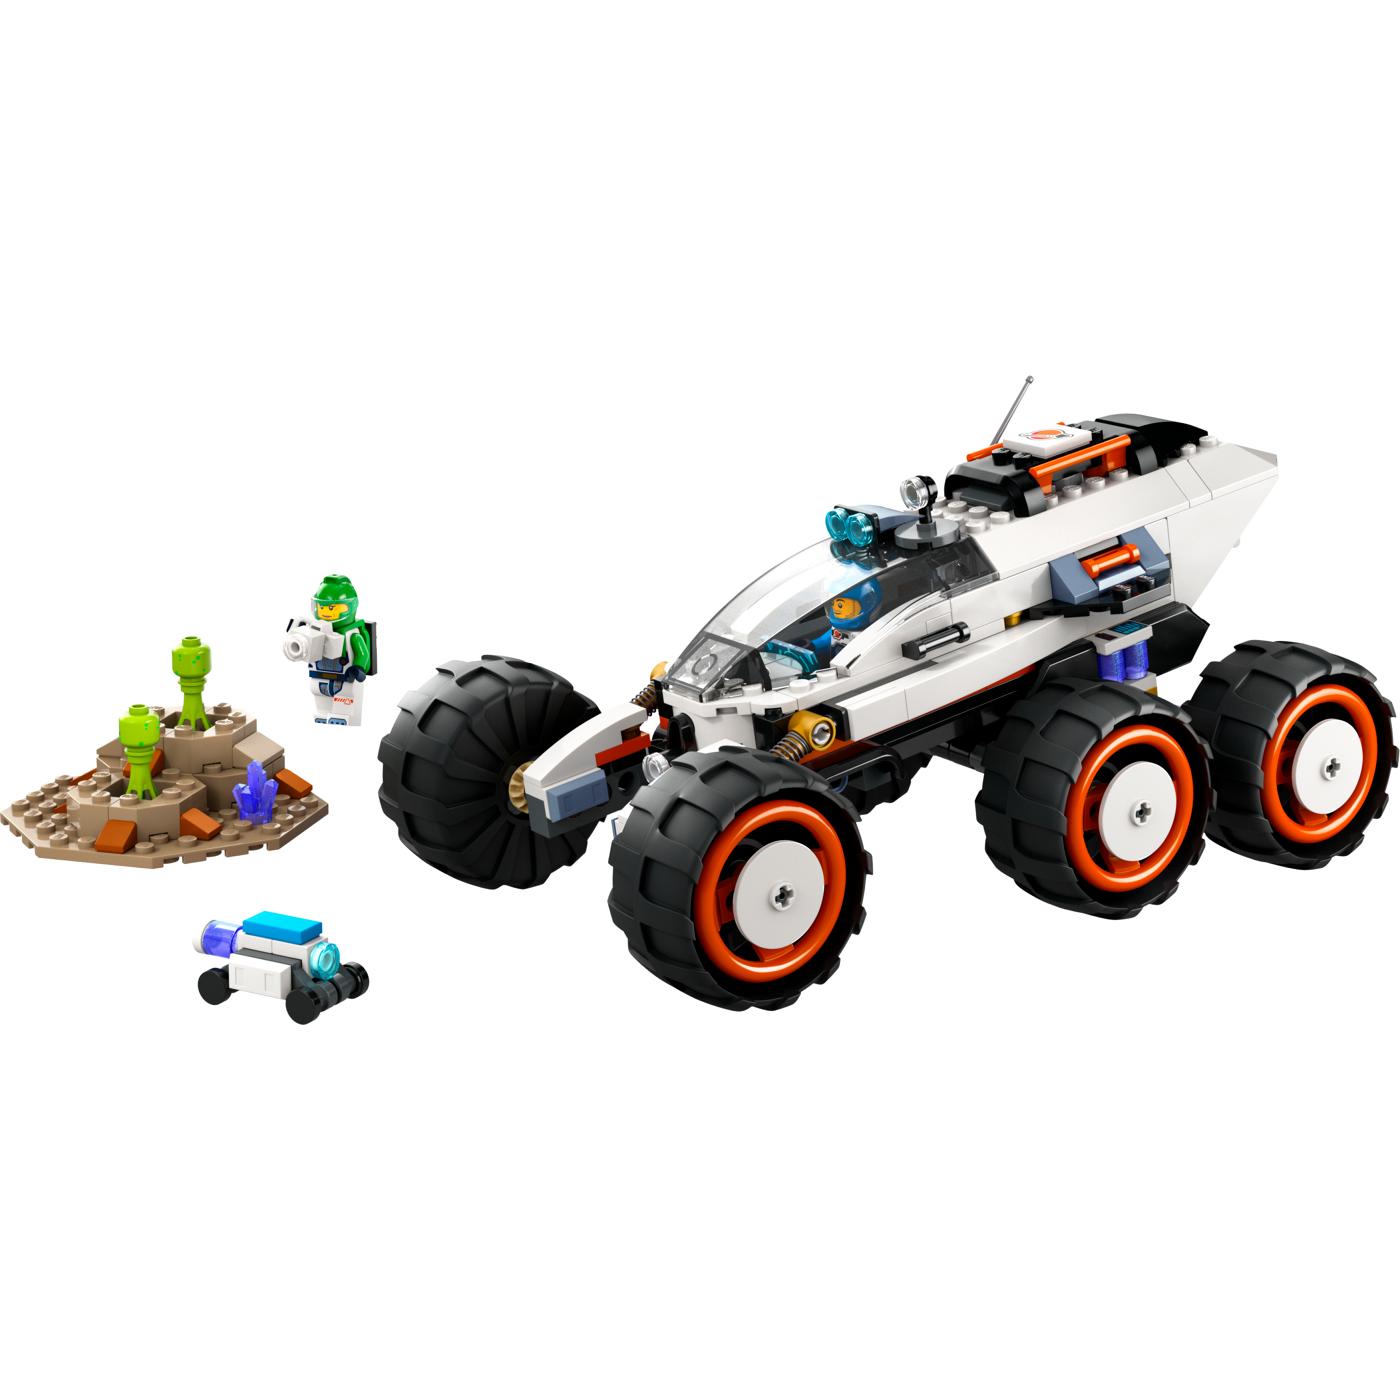 LEGO City Space Explorer Rover & Alien Life Set; image 2 of 2